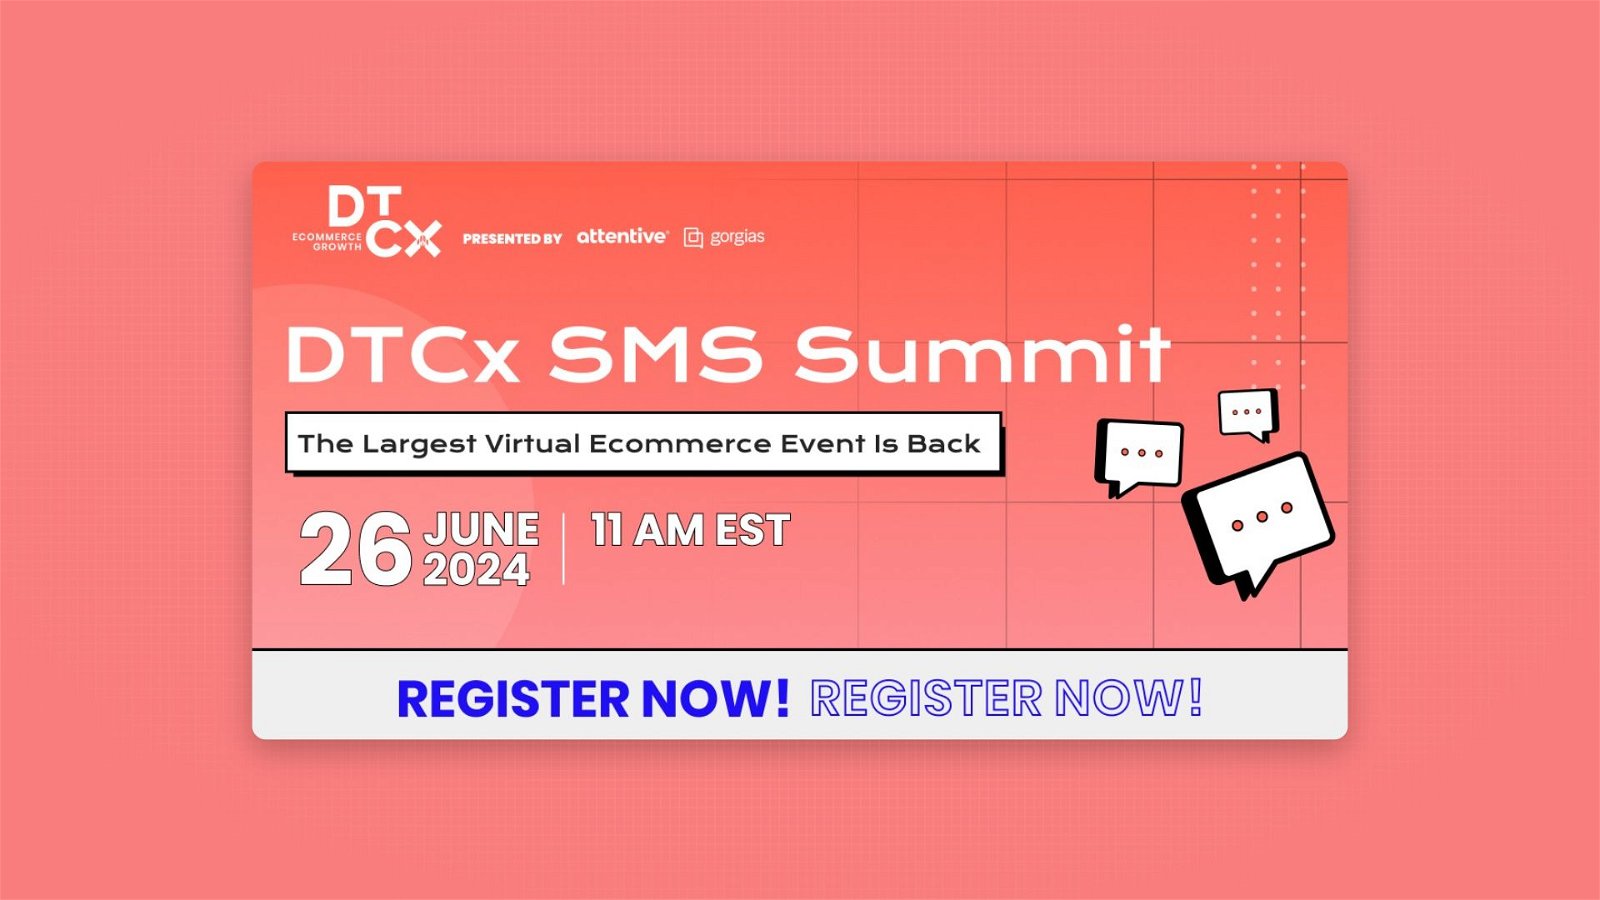 DTCx SMS Summit 2024